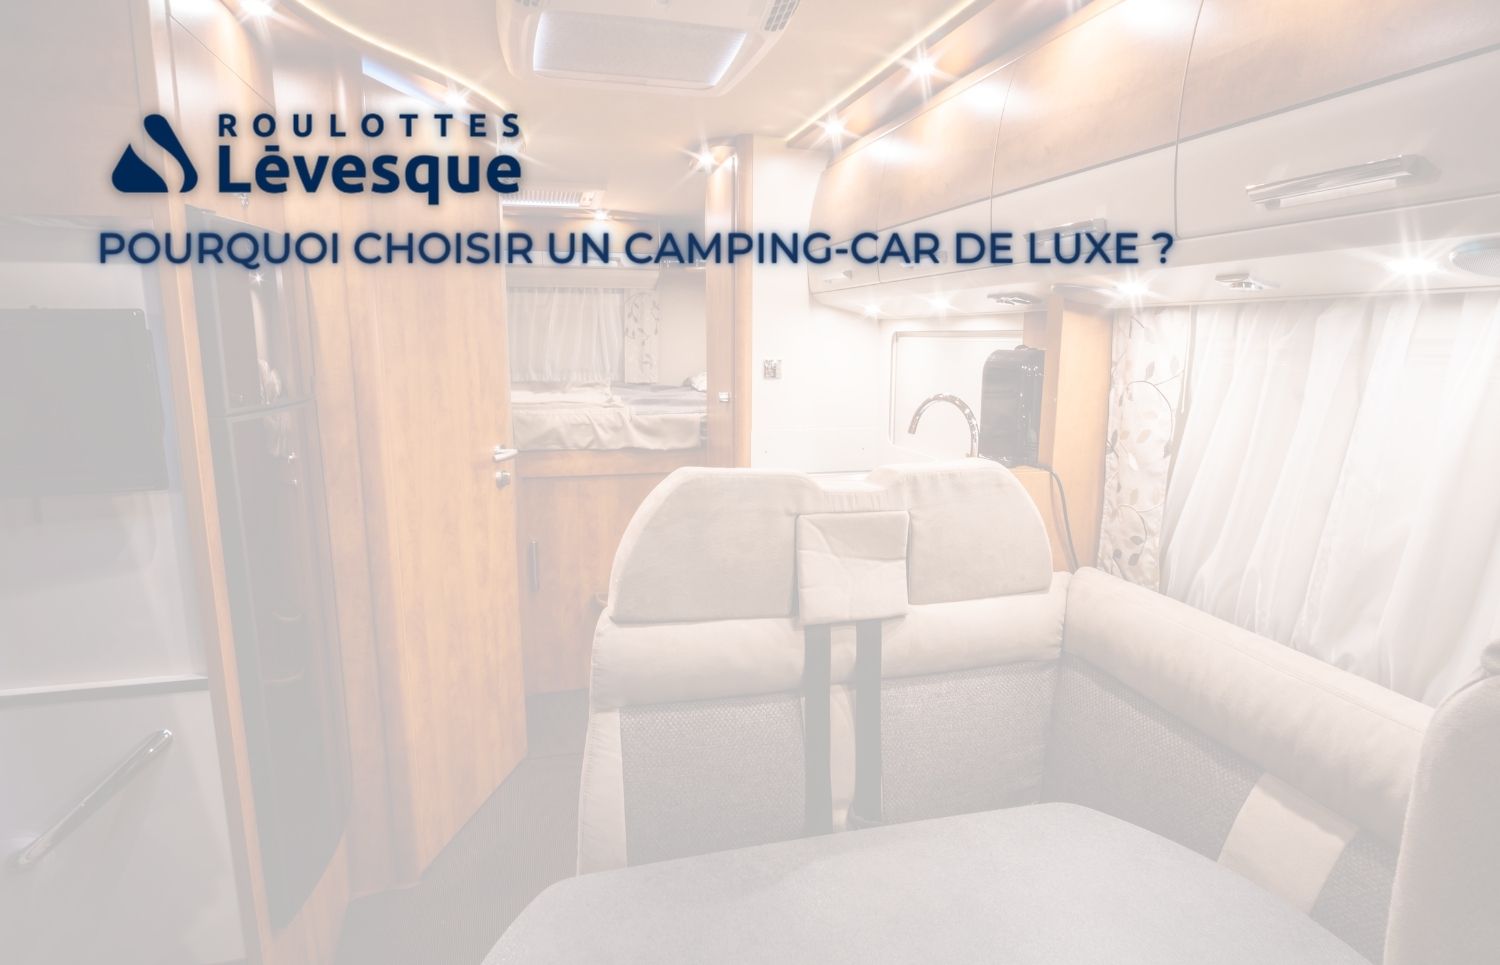 Pourquoi choisir un camping-car de luxe ?